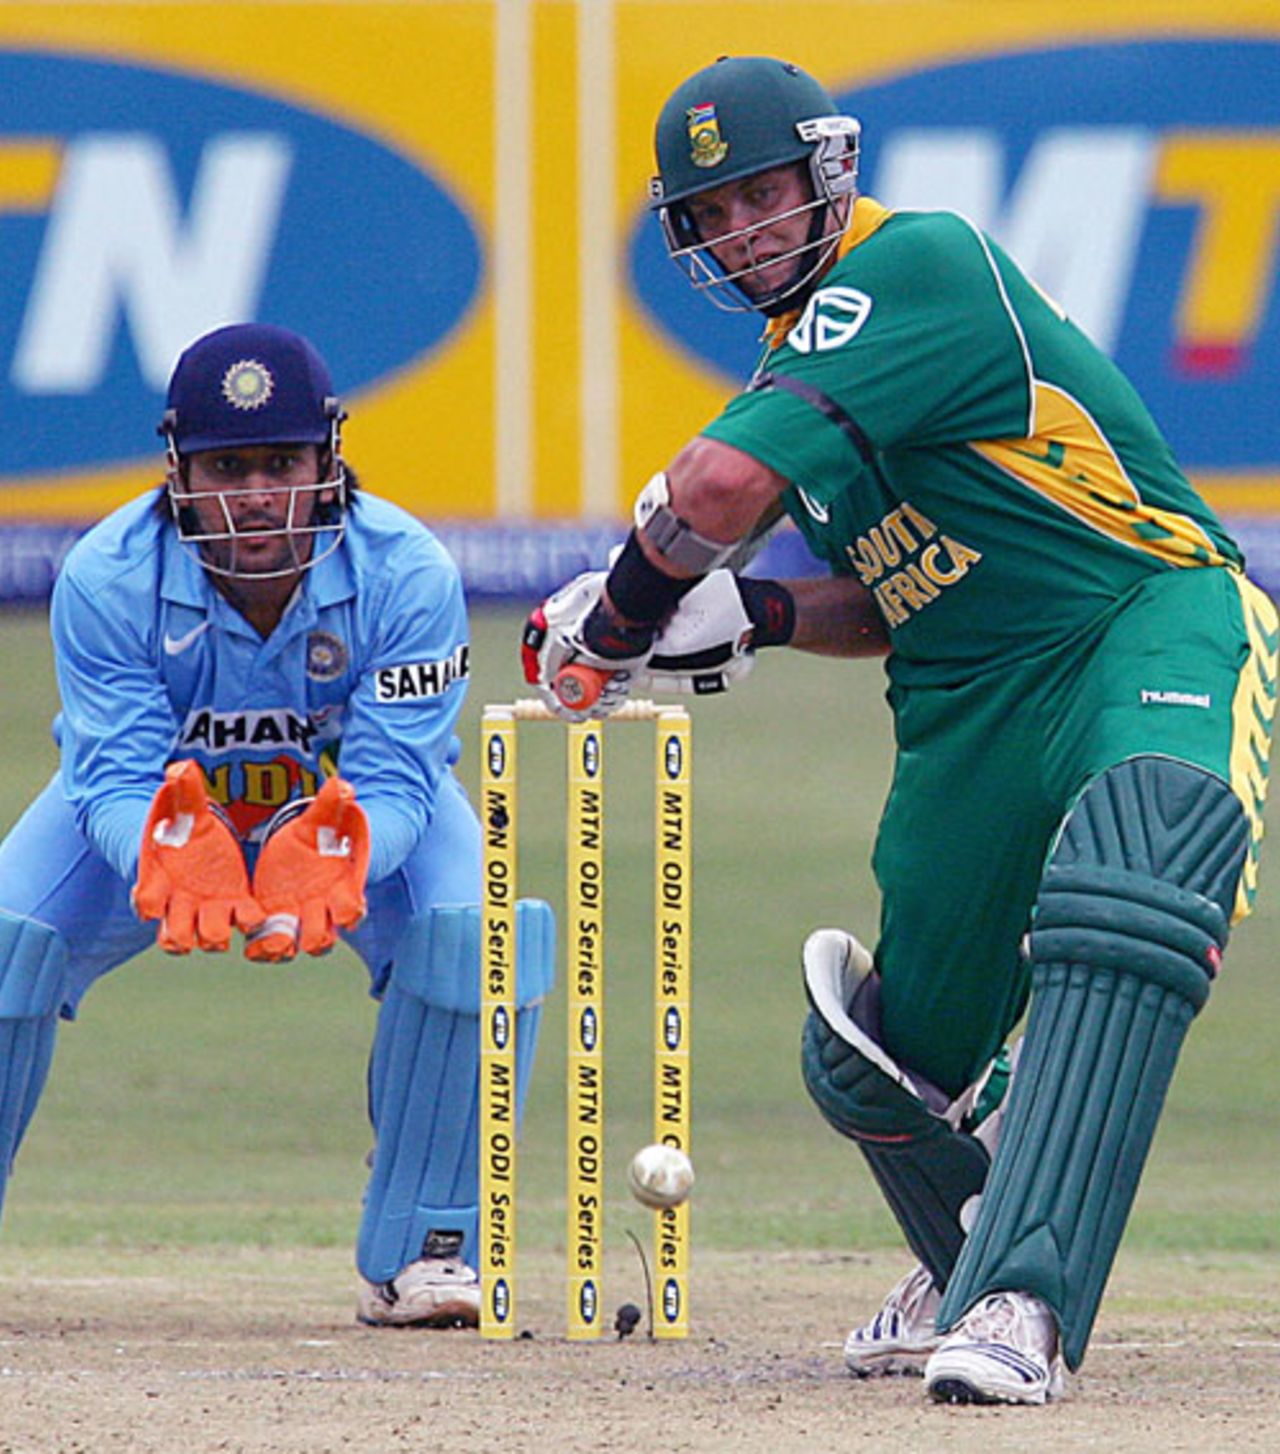 Jacques Kallis drives Sachin Tendulkar as Dhoni watches, South Africa v India, 2nd ODI, Durban, November 22, 2006